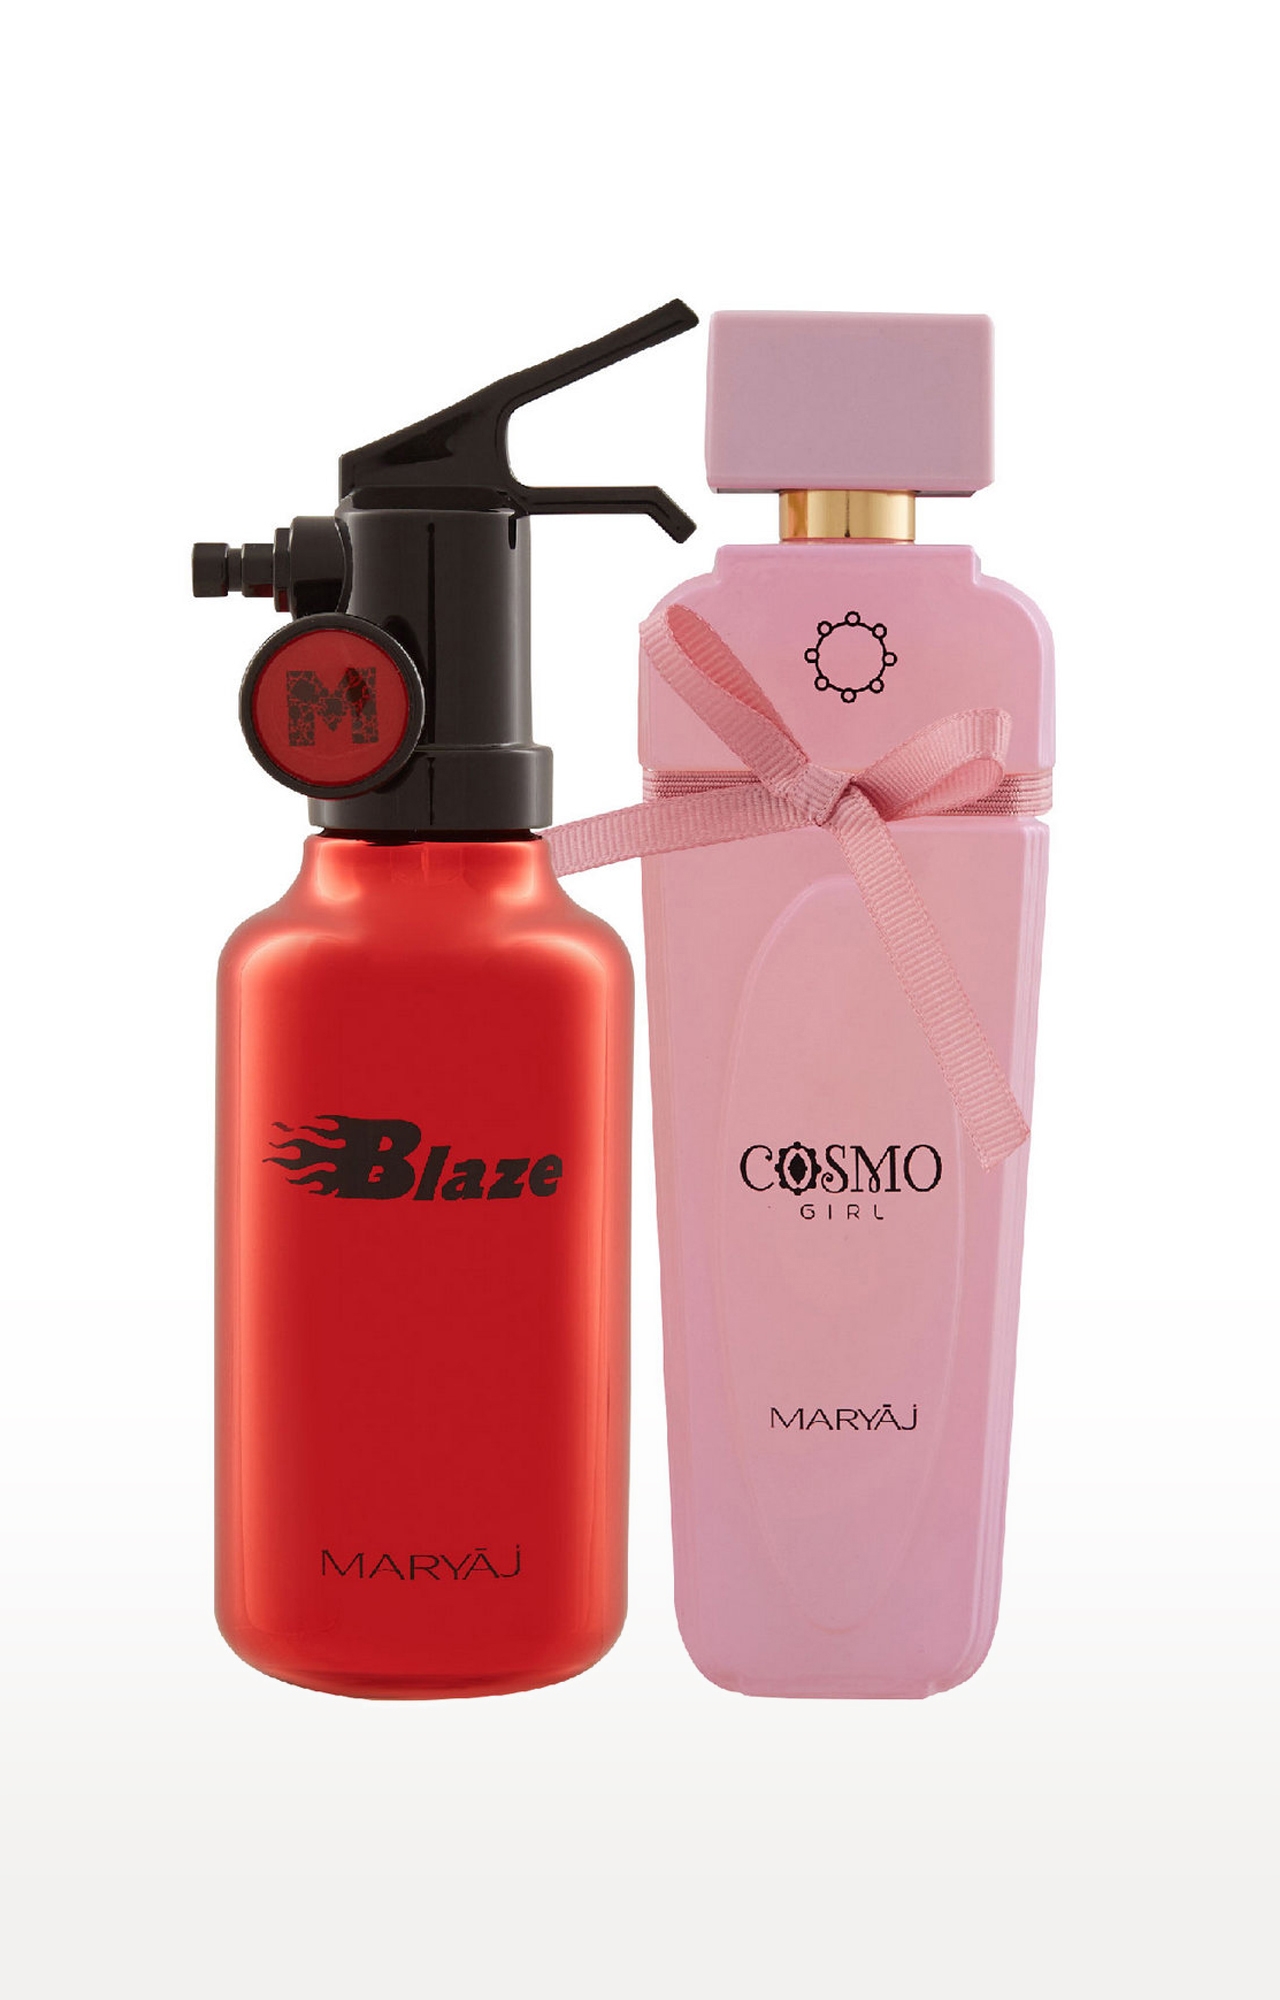 Maryaj | Maryaj Blaze Eau De Parfum Perfume 100ml for Men and Maryaj Cosmo Girl Eau De Parfum Perfume 100ml for WoMen